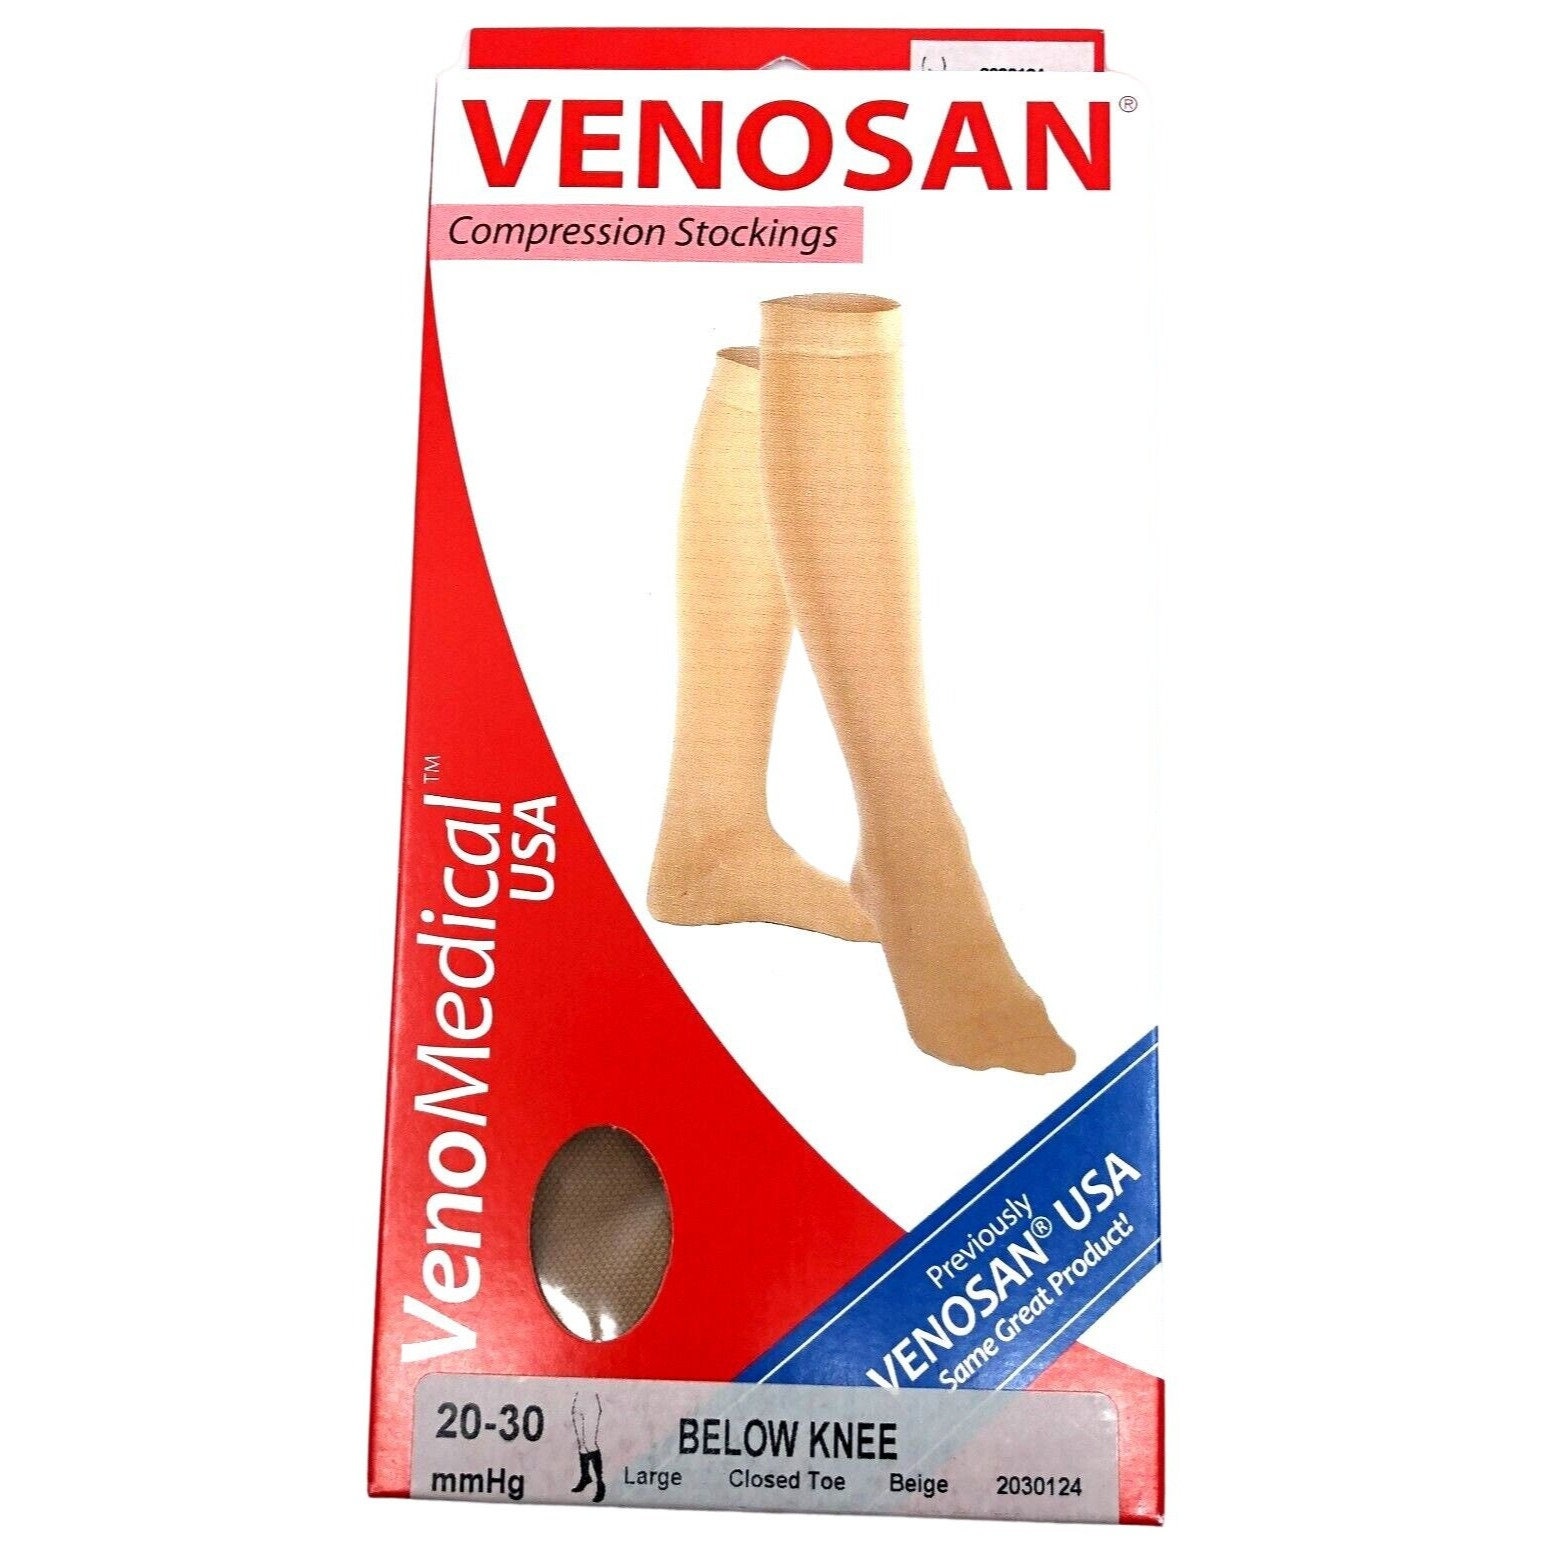 Venosan Compression Stockings Below Knee Large 20-30 Mmhg Closed Toe Beige  USA -  Canada